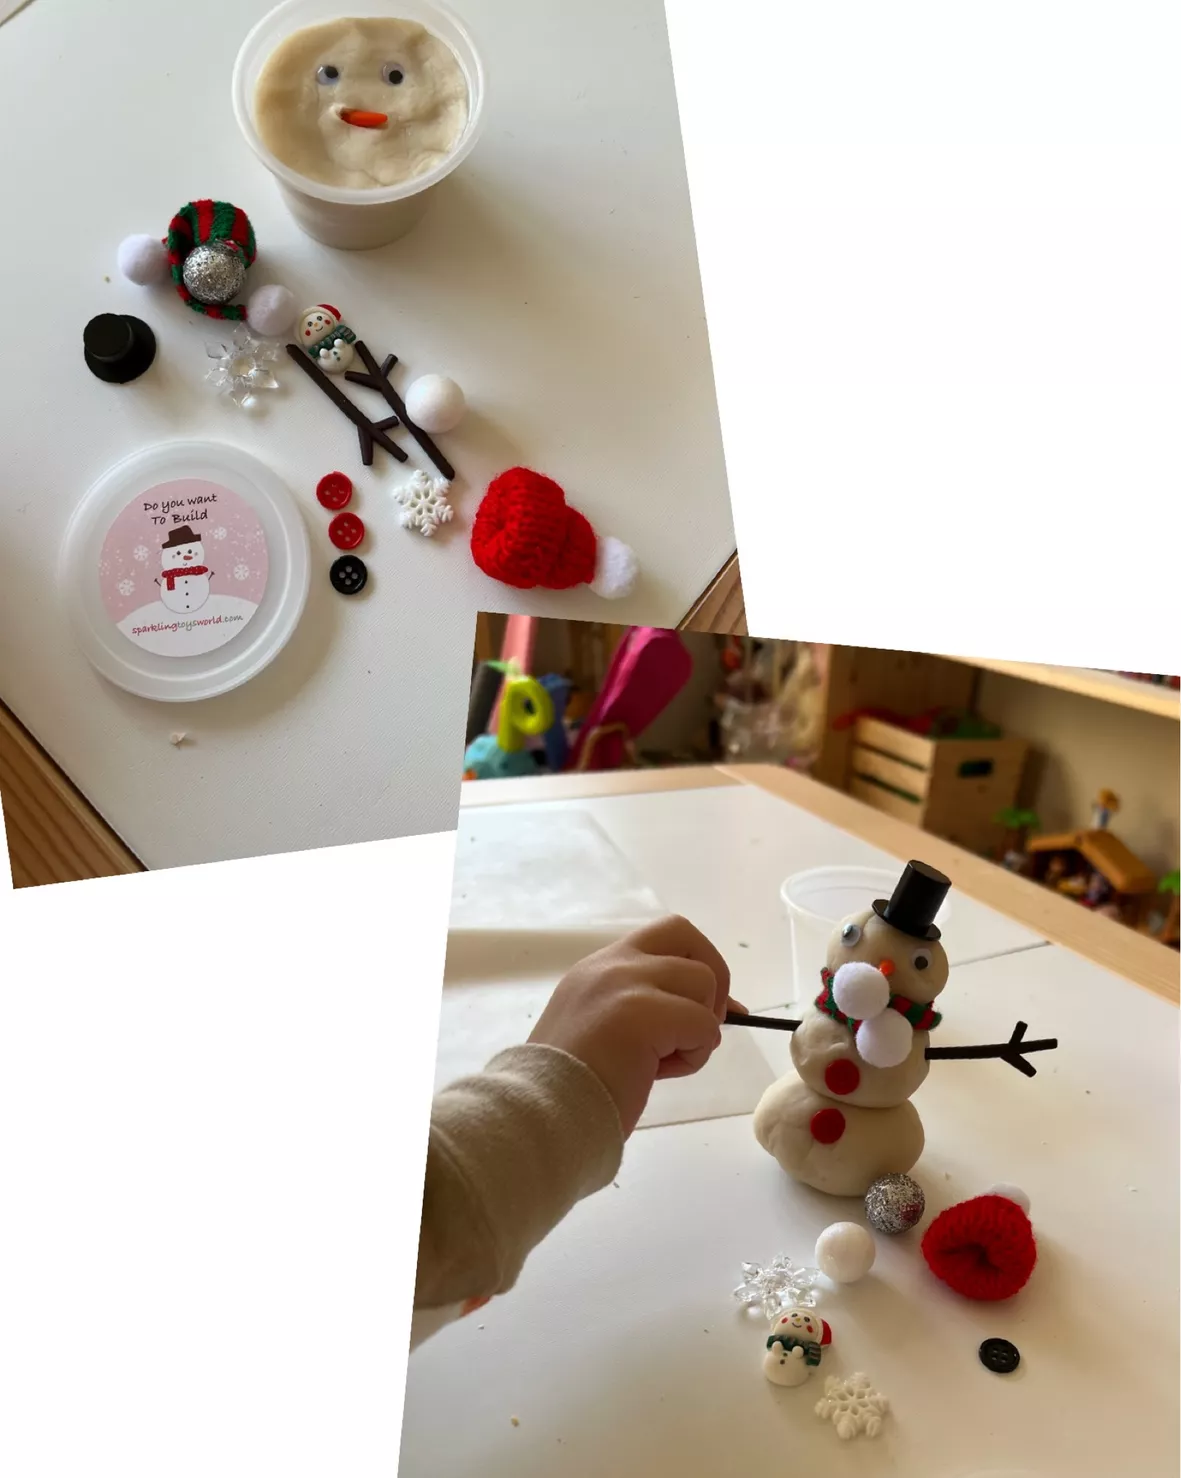 Christmas Playdough Set – The Craft Kit Co.